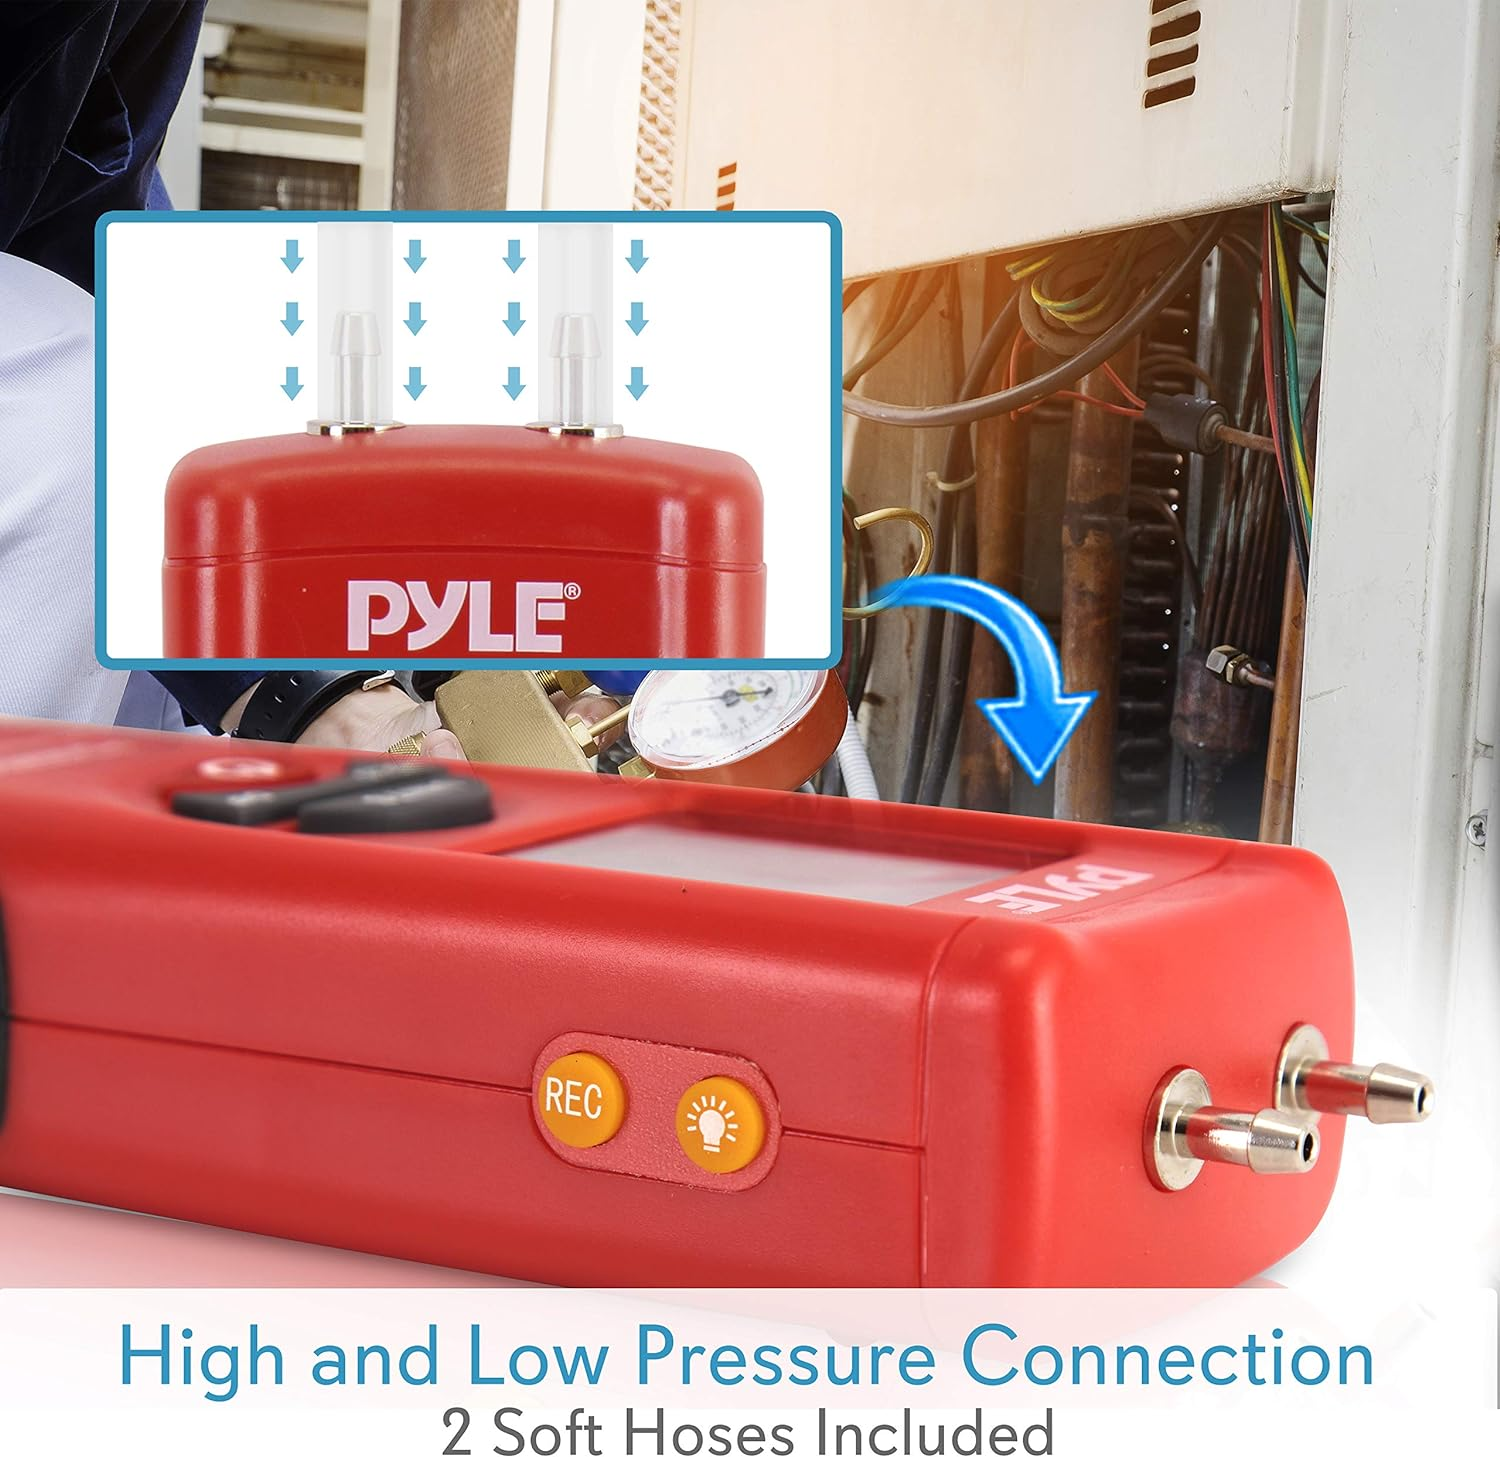 Pyle Meters Manometer 11 Unit of Pressure-Meters Digital Measurement Maximum 10 PSI Data Hold & Error Code Measure Gauge Differential Gas Tester-Large LCD Backlit Dual Display w/Auto Power Off PDMM01